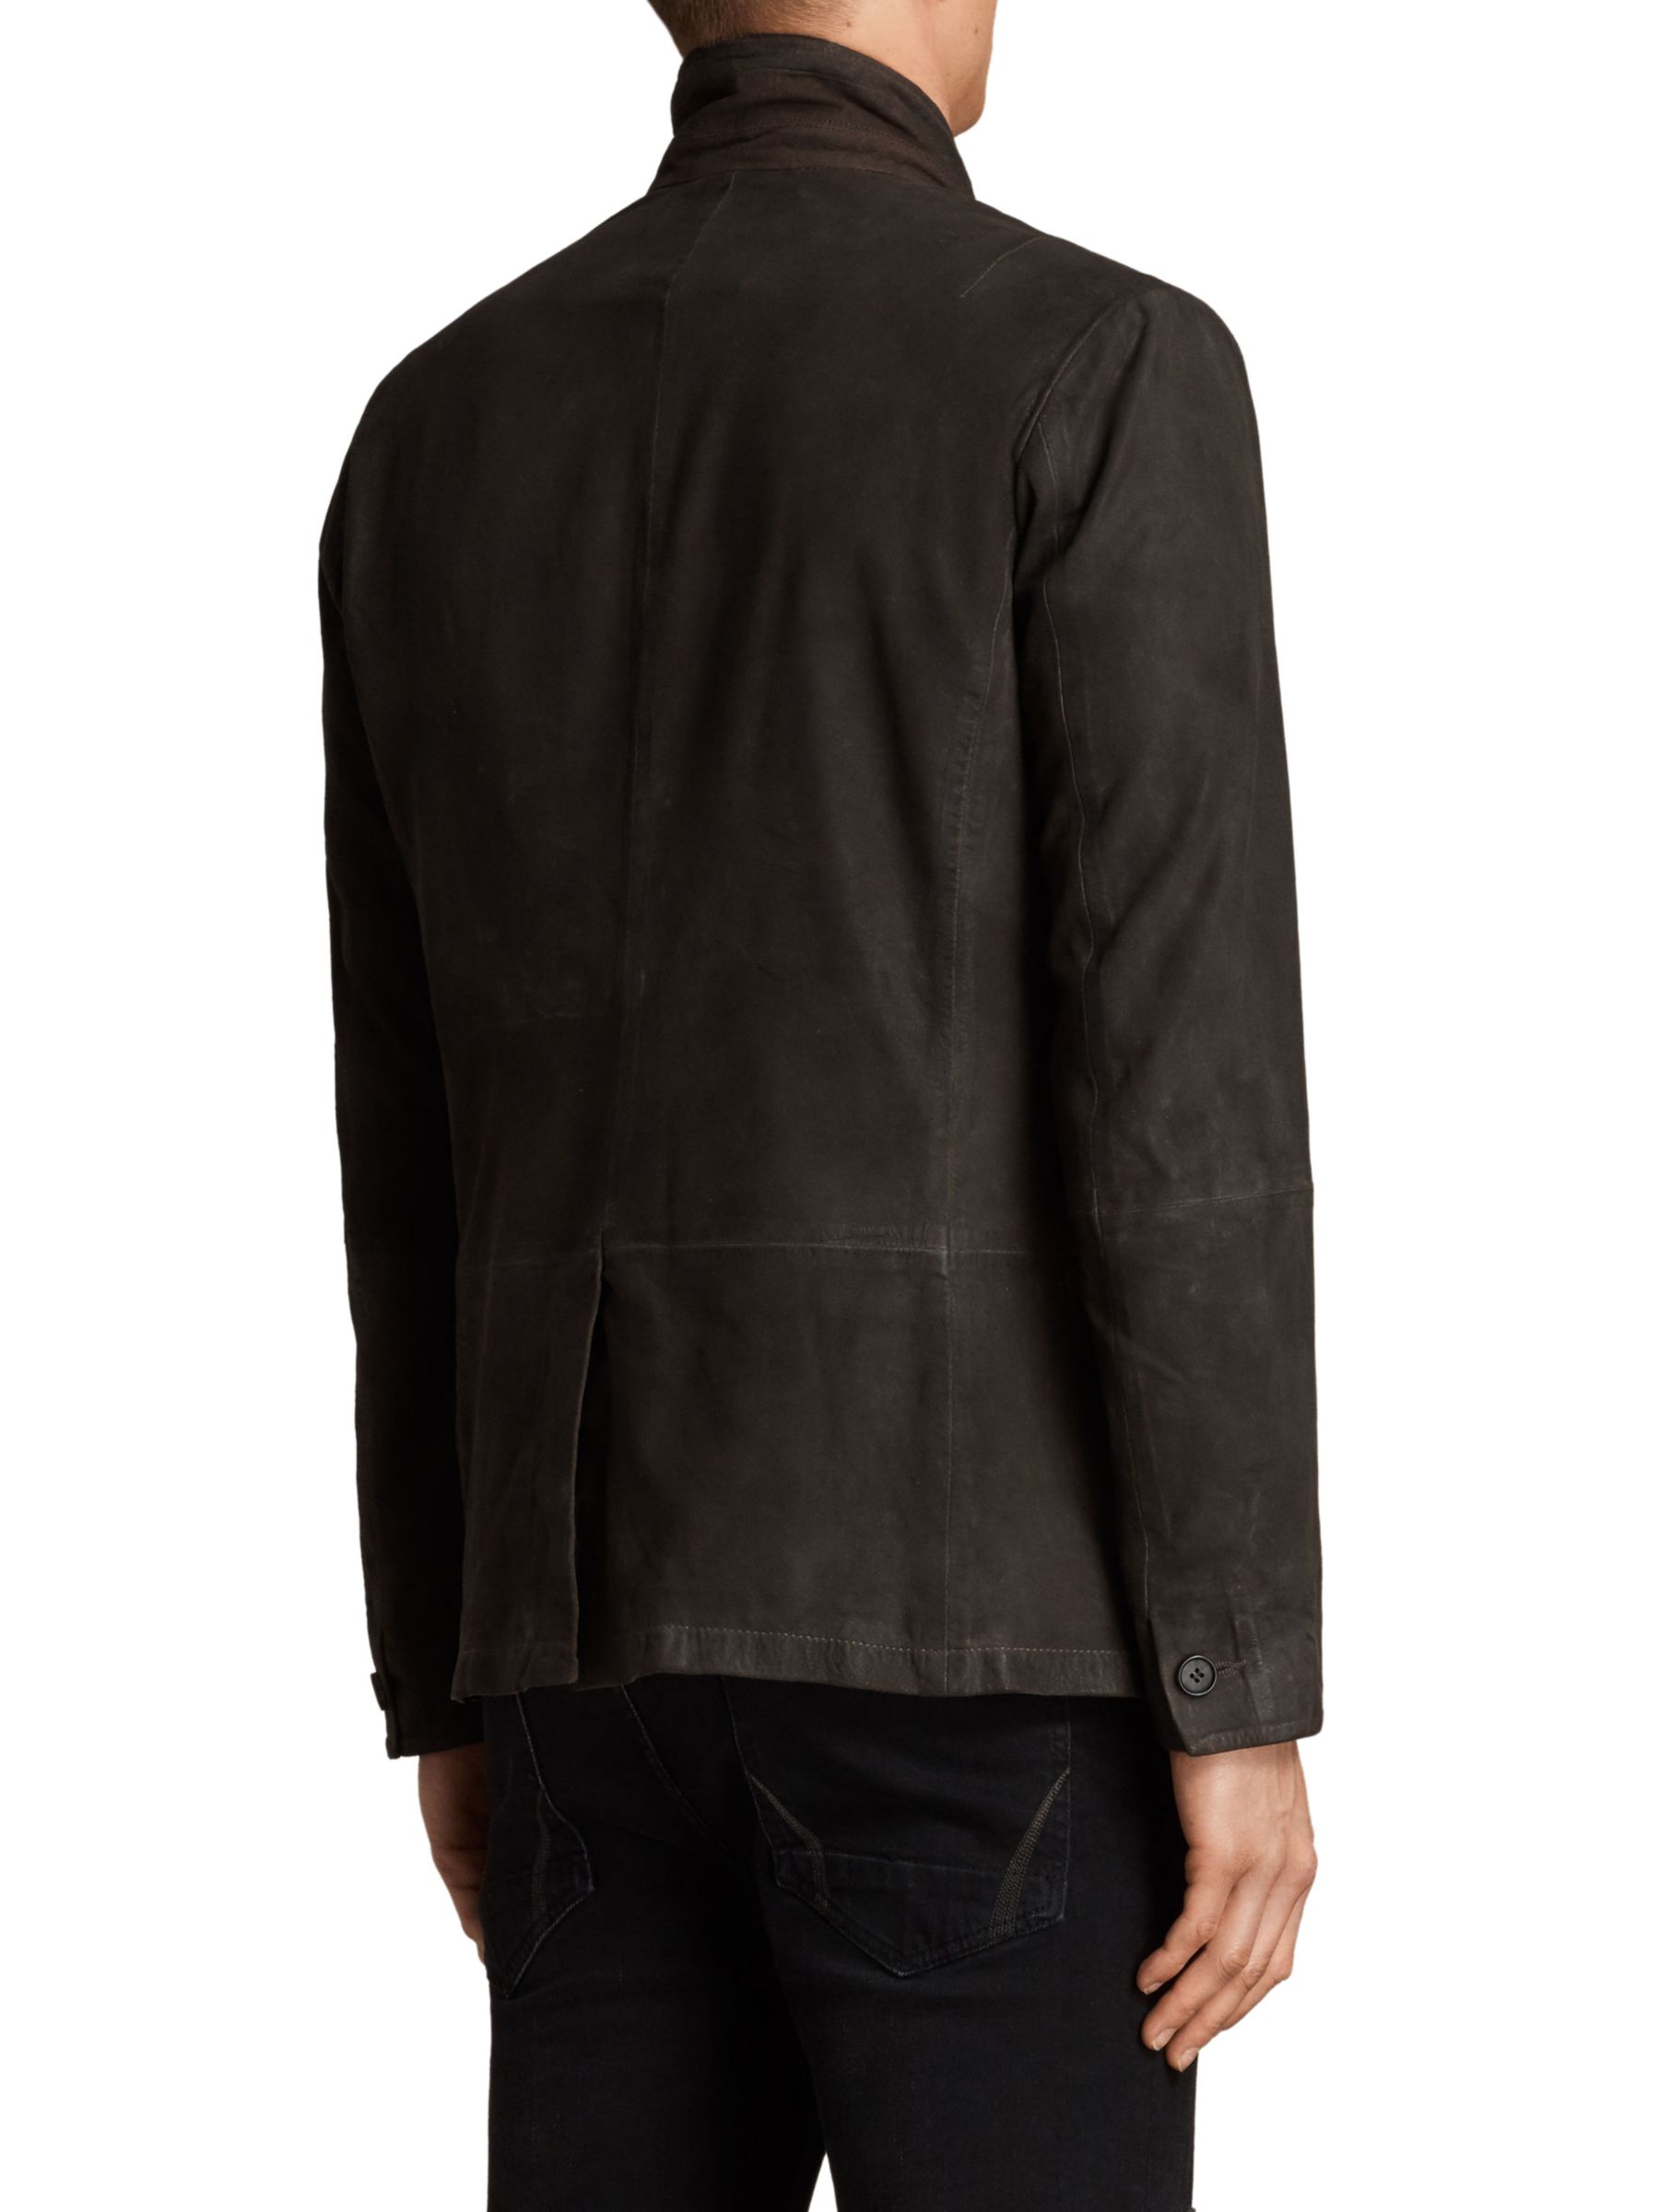 AllSaints Merson Leather Blazer Jacket, Anthracite Grey